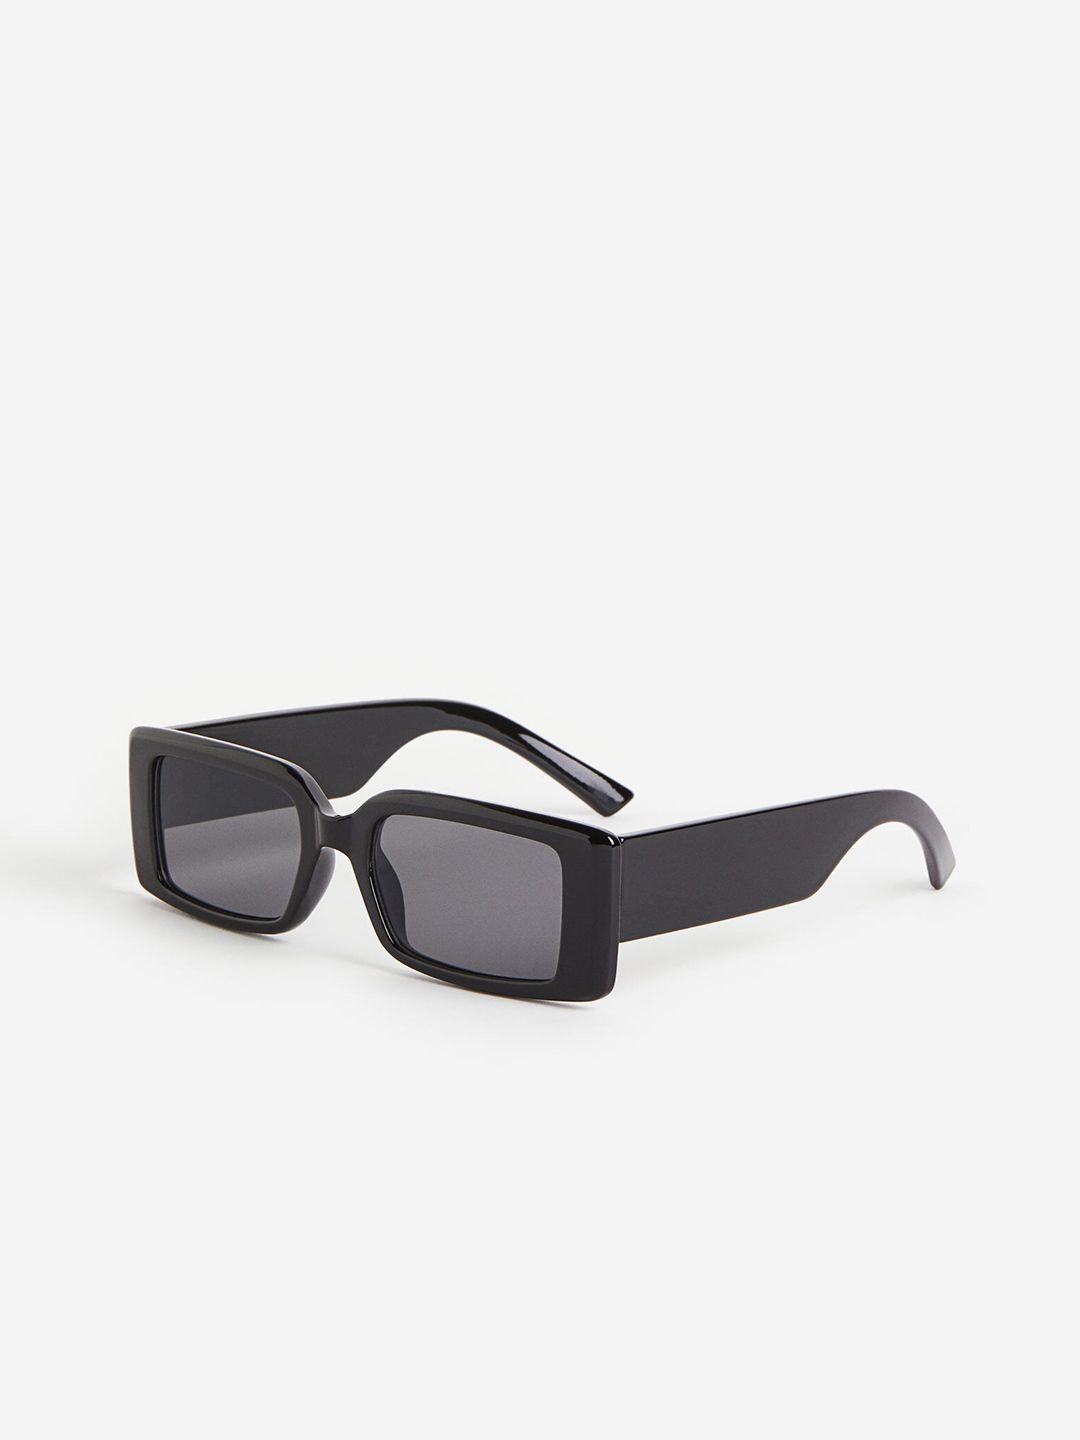 h&m girls sunglasses